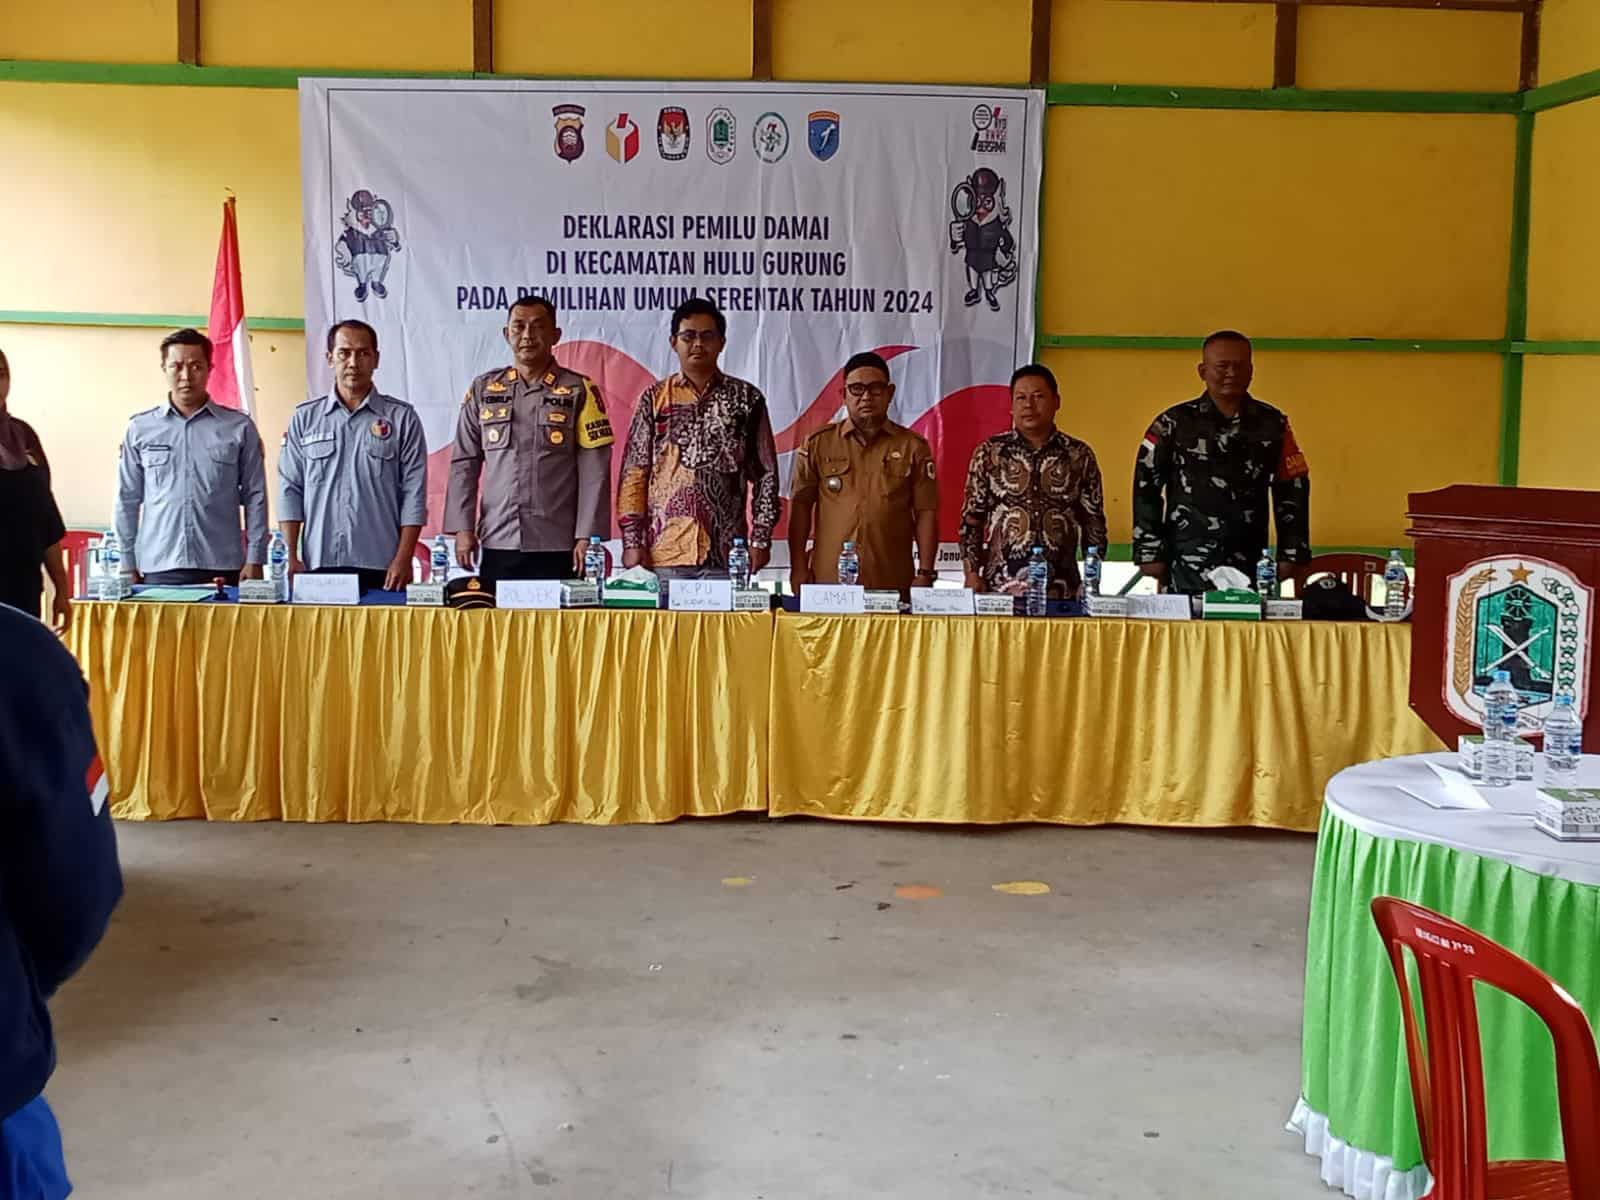 Deklarasi pemilu damai se Kecamatan Hulu Gurung Kabupaten Kapuas Hulu. (Foto: Ishaq)